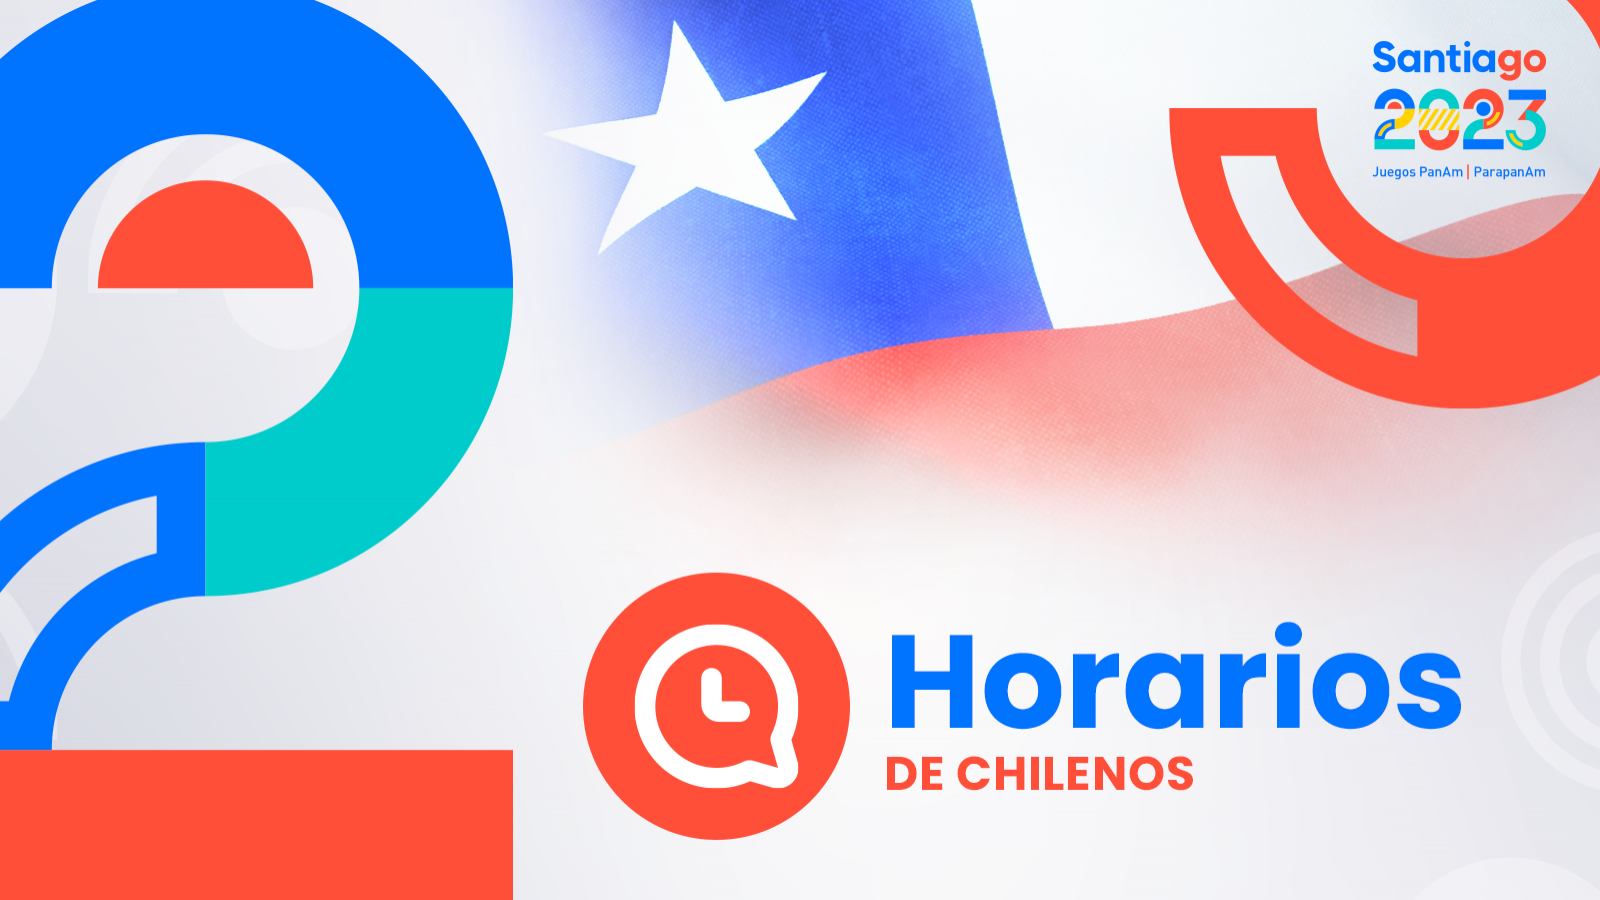 HORARIOS de chilenos en Santiago 2023: sábado 4 de noviembre